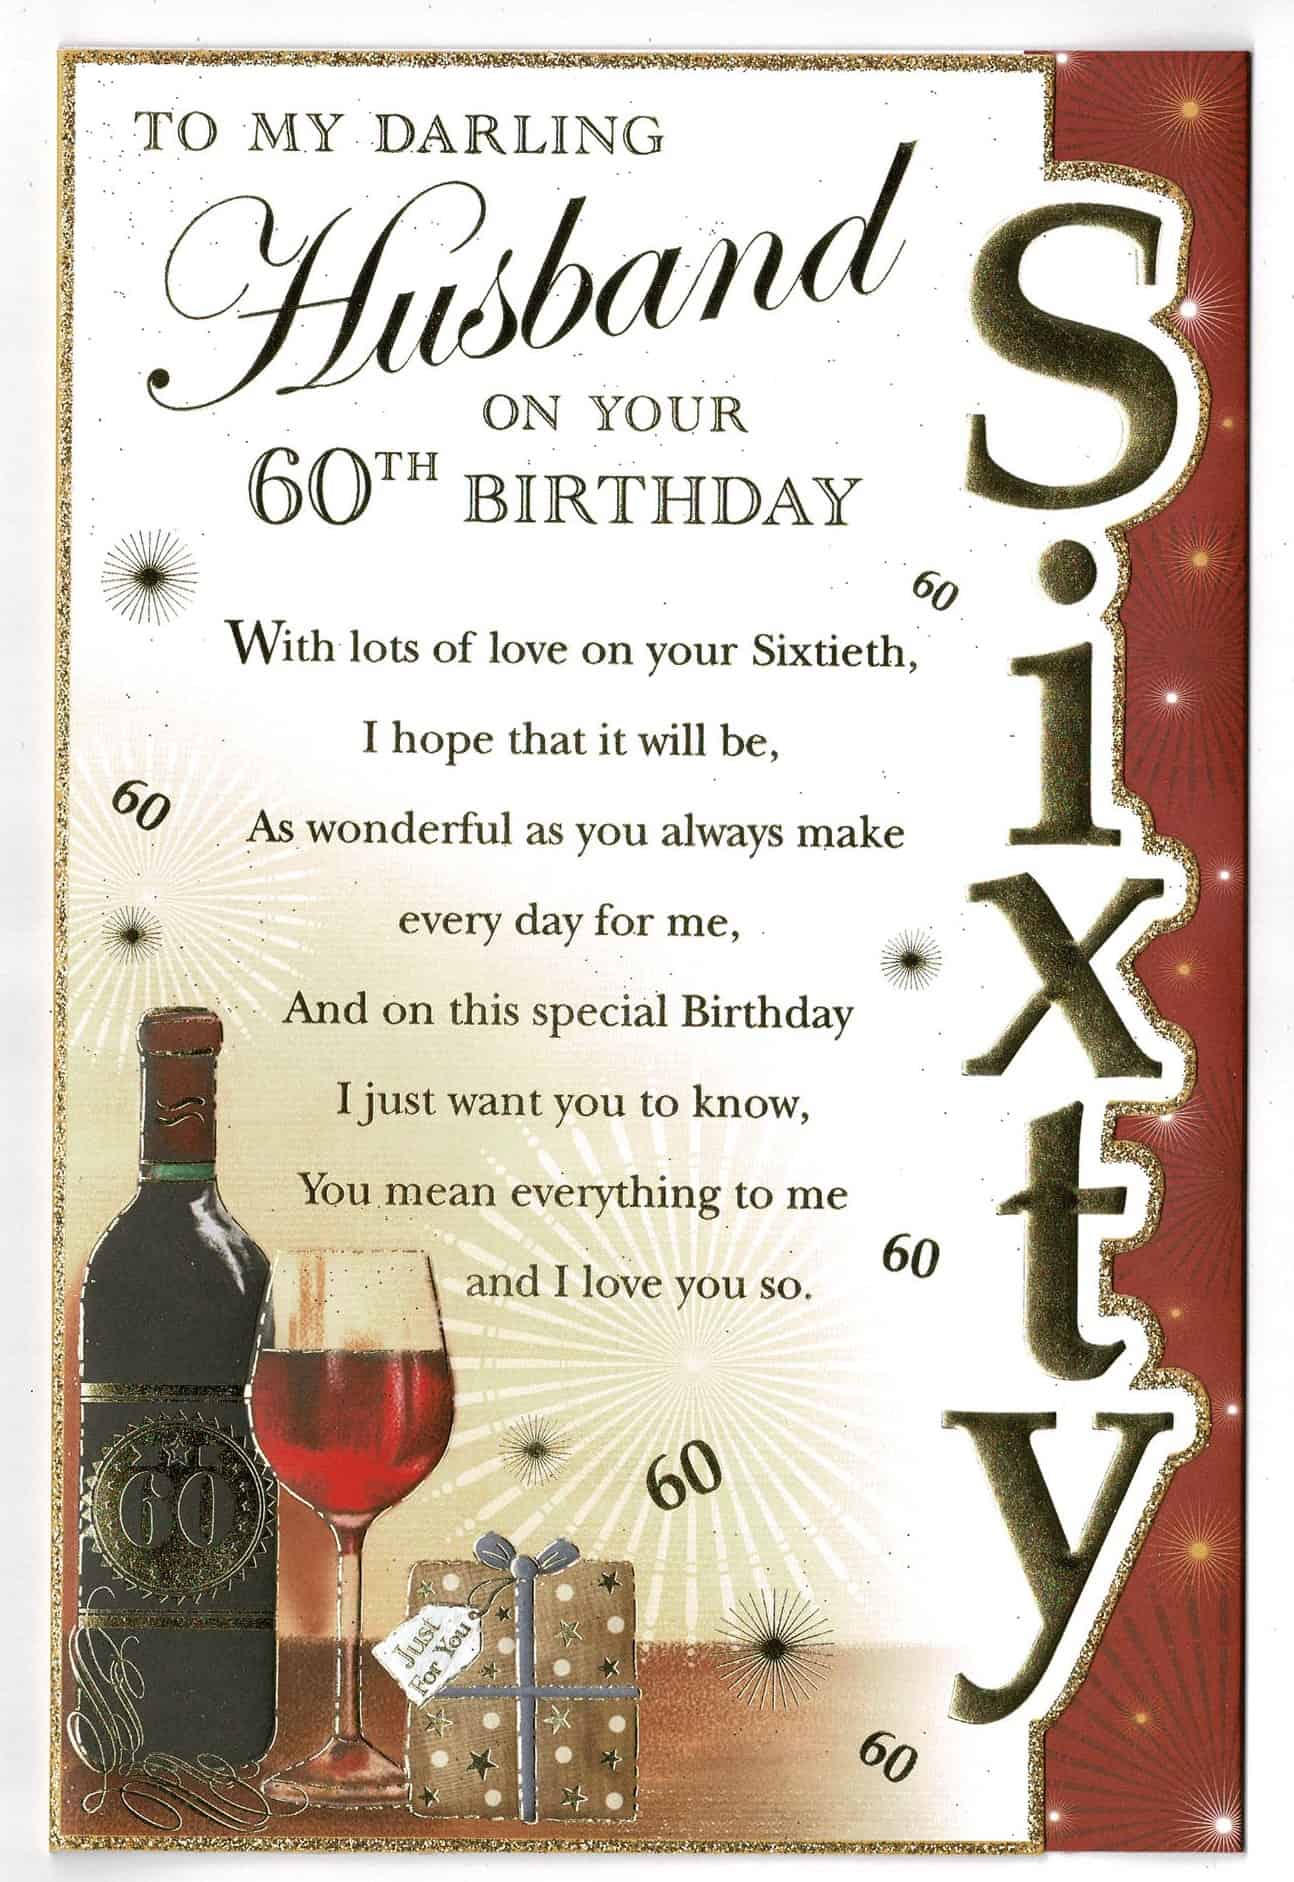 husband-birthday-card-to-my-darling-husband-on-your-60th-birthday-tri-fold-d-5051856382692-ebay